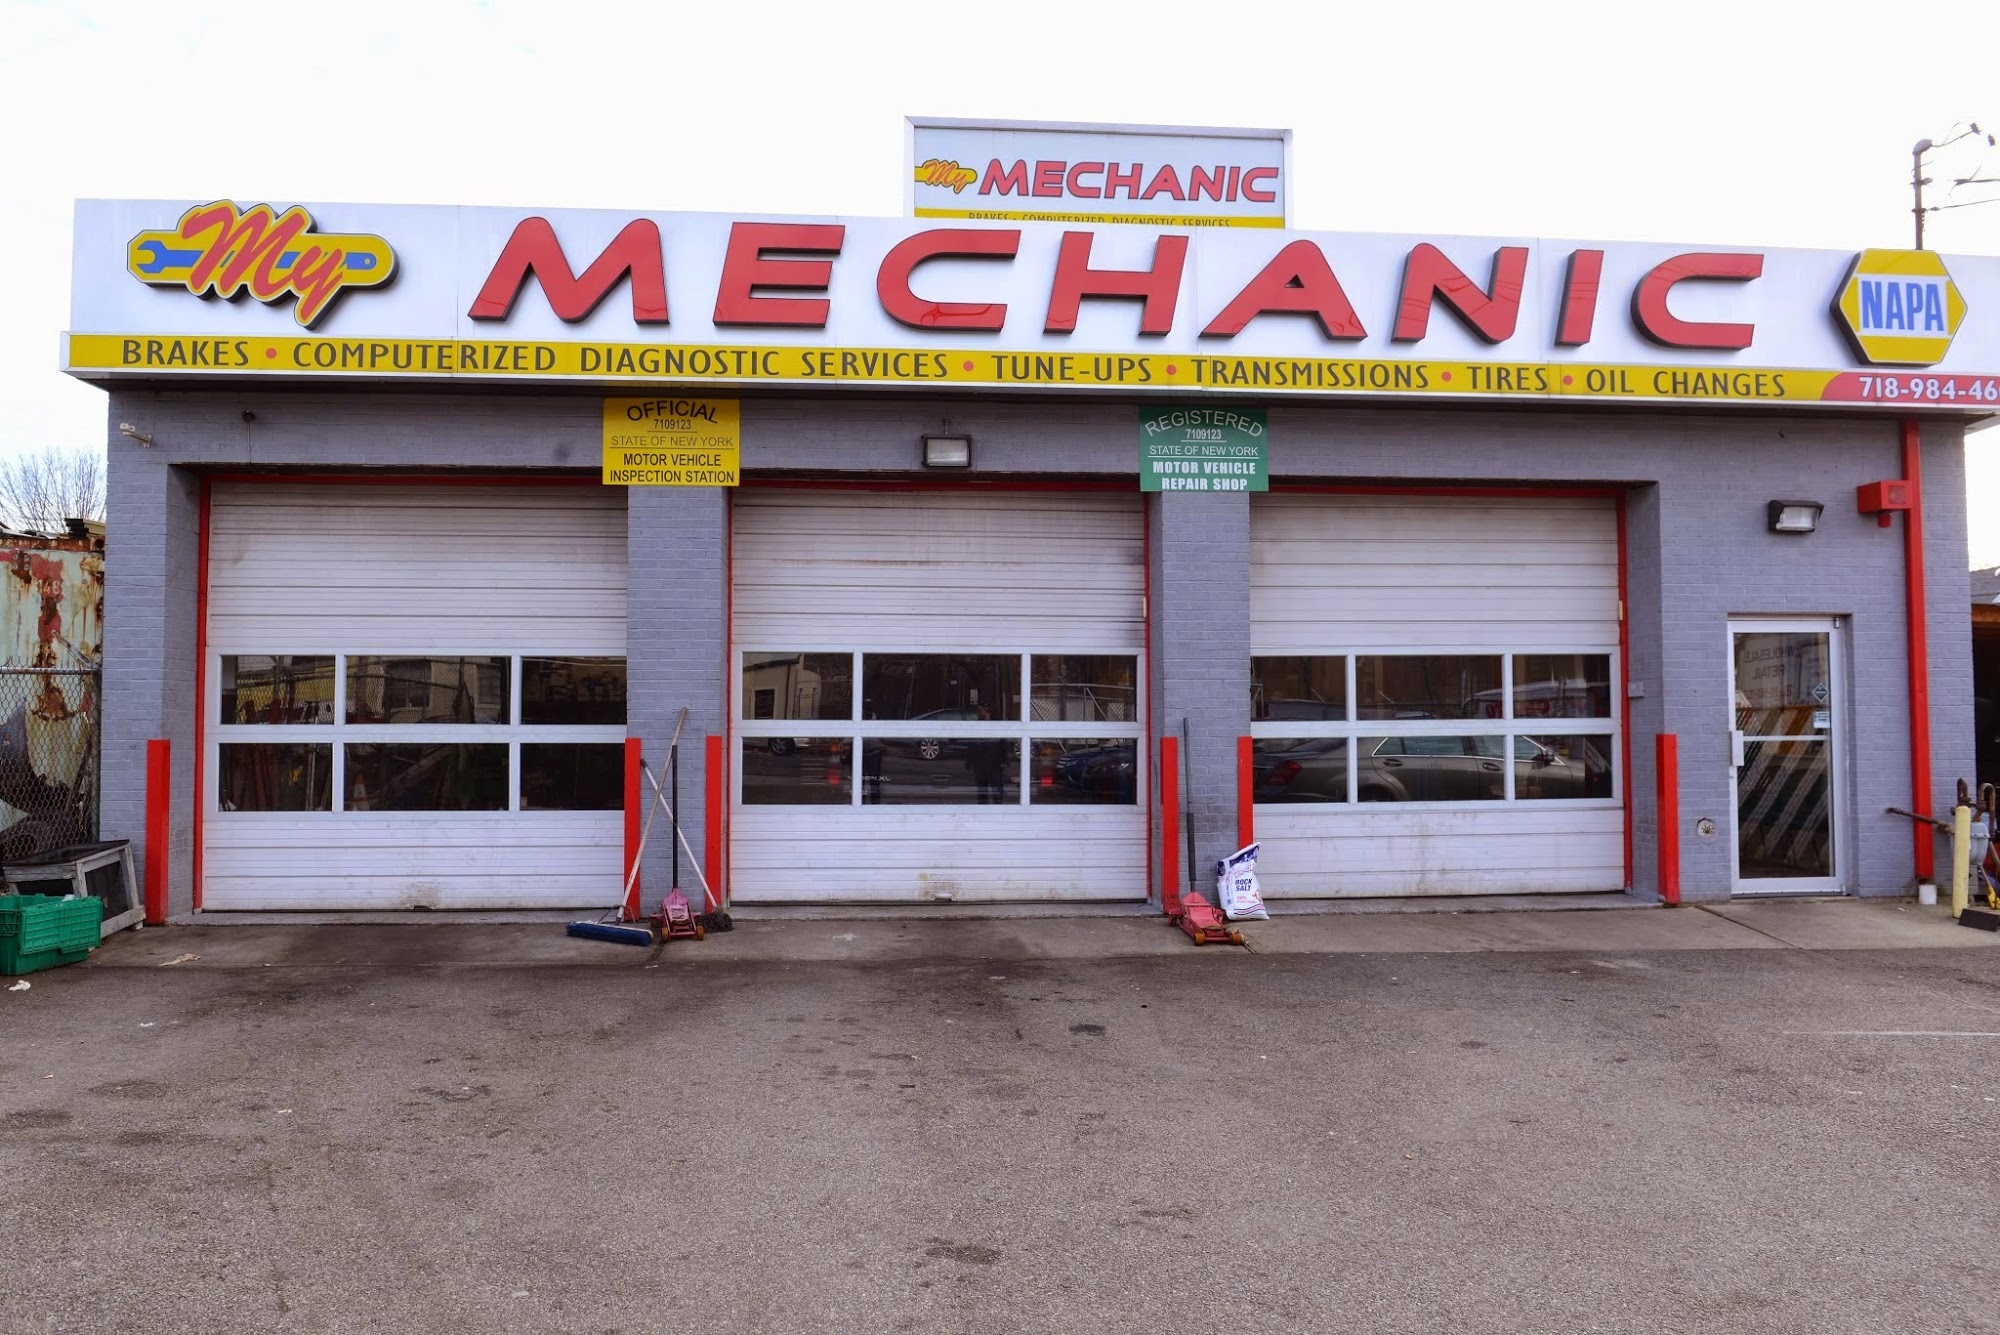 My Mechanic Auto Services